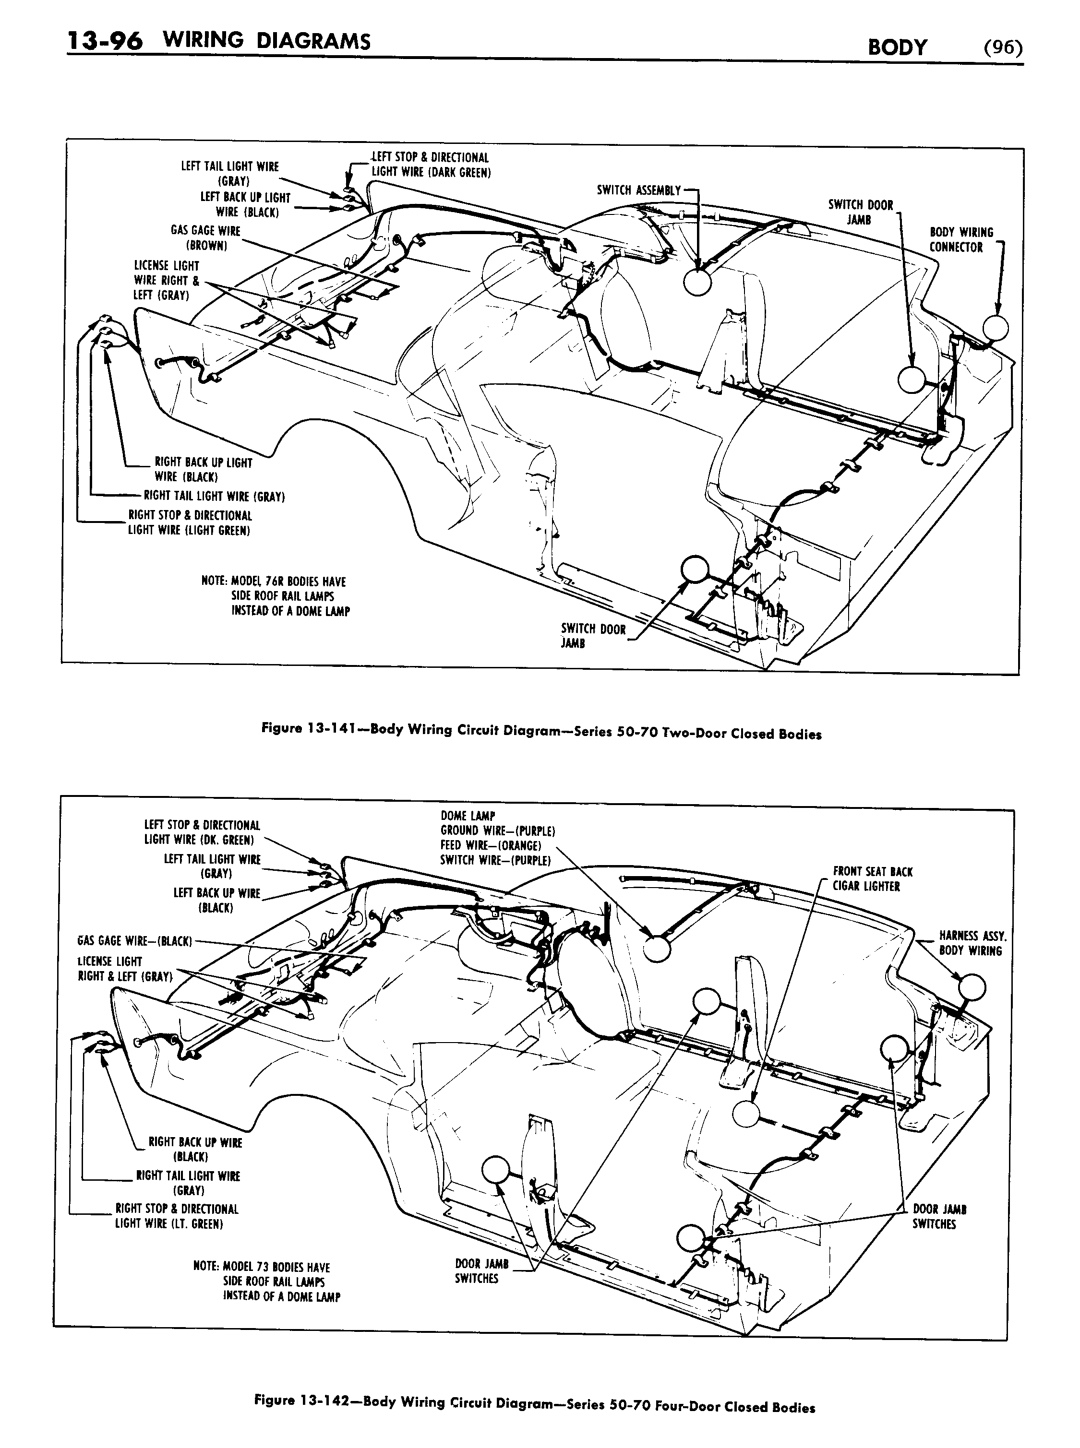 n_1957 Buick Body Service Manual-098-098.jpg